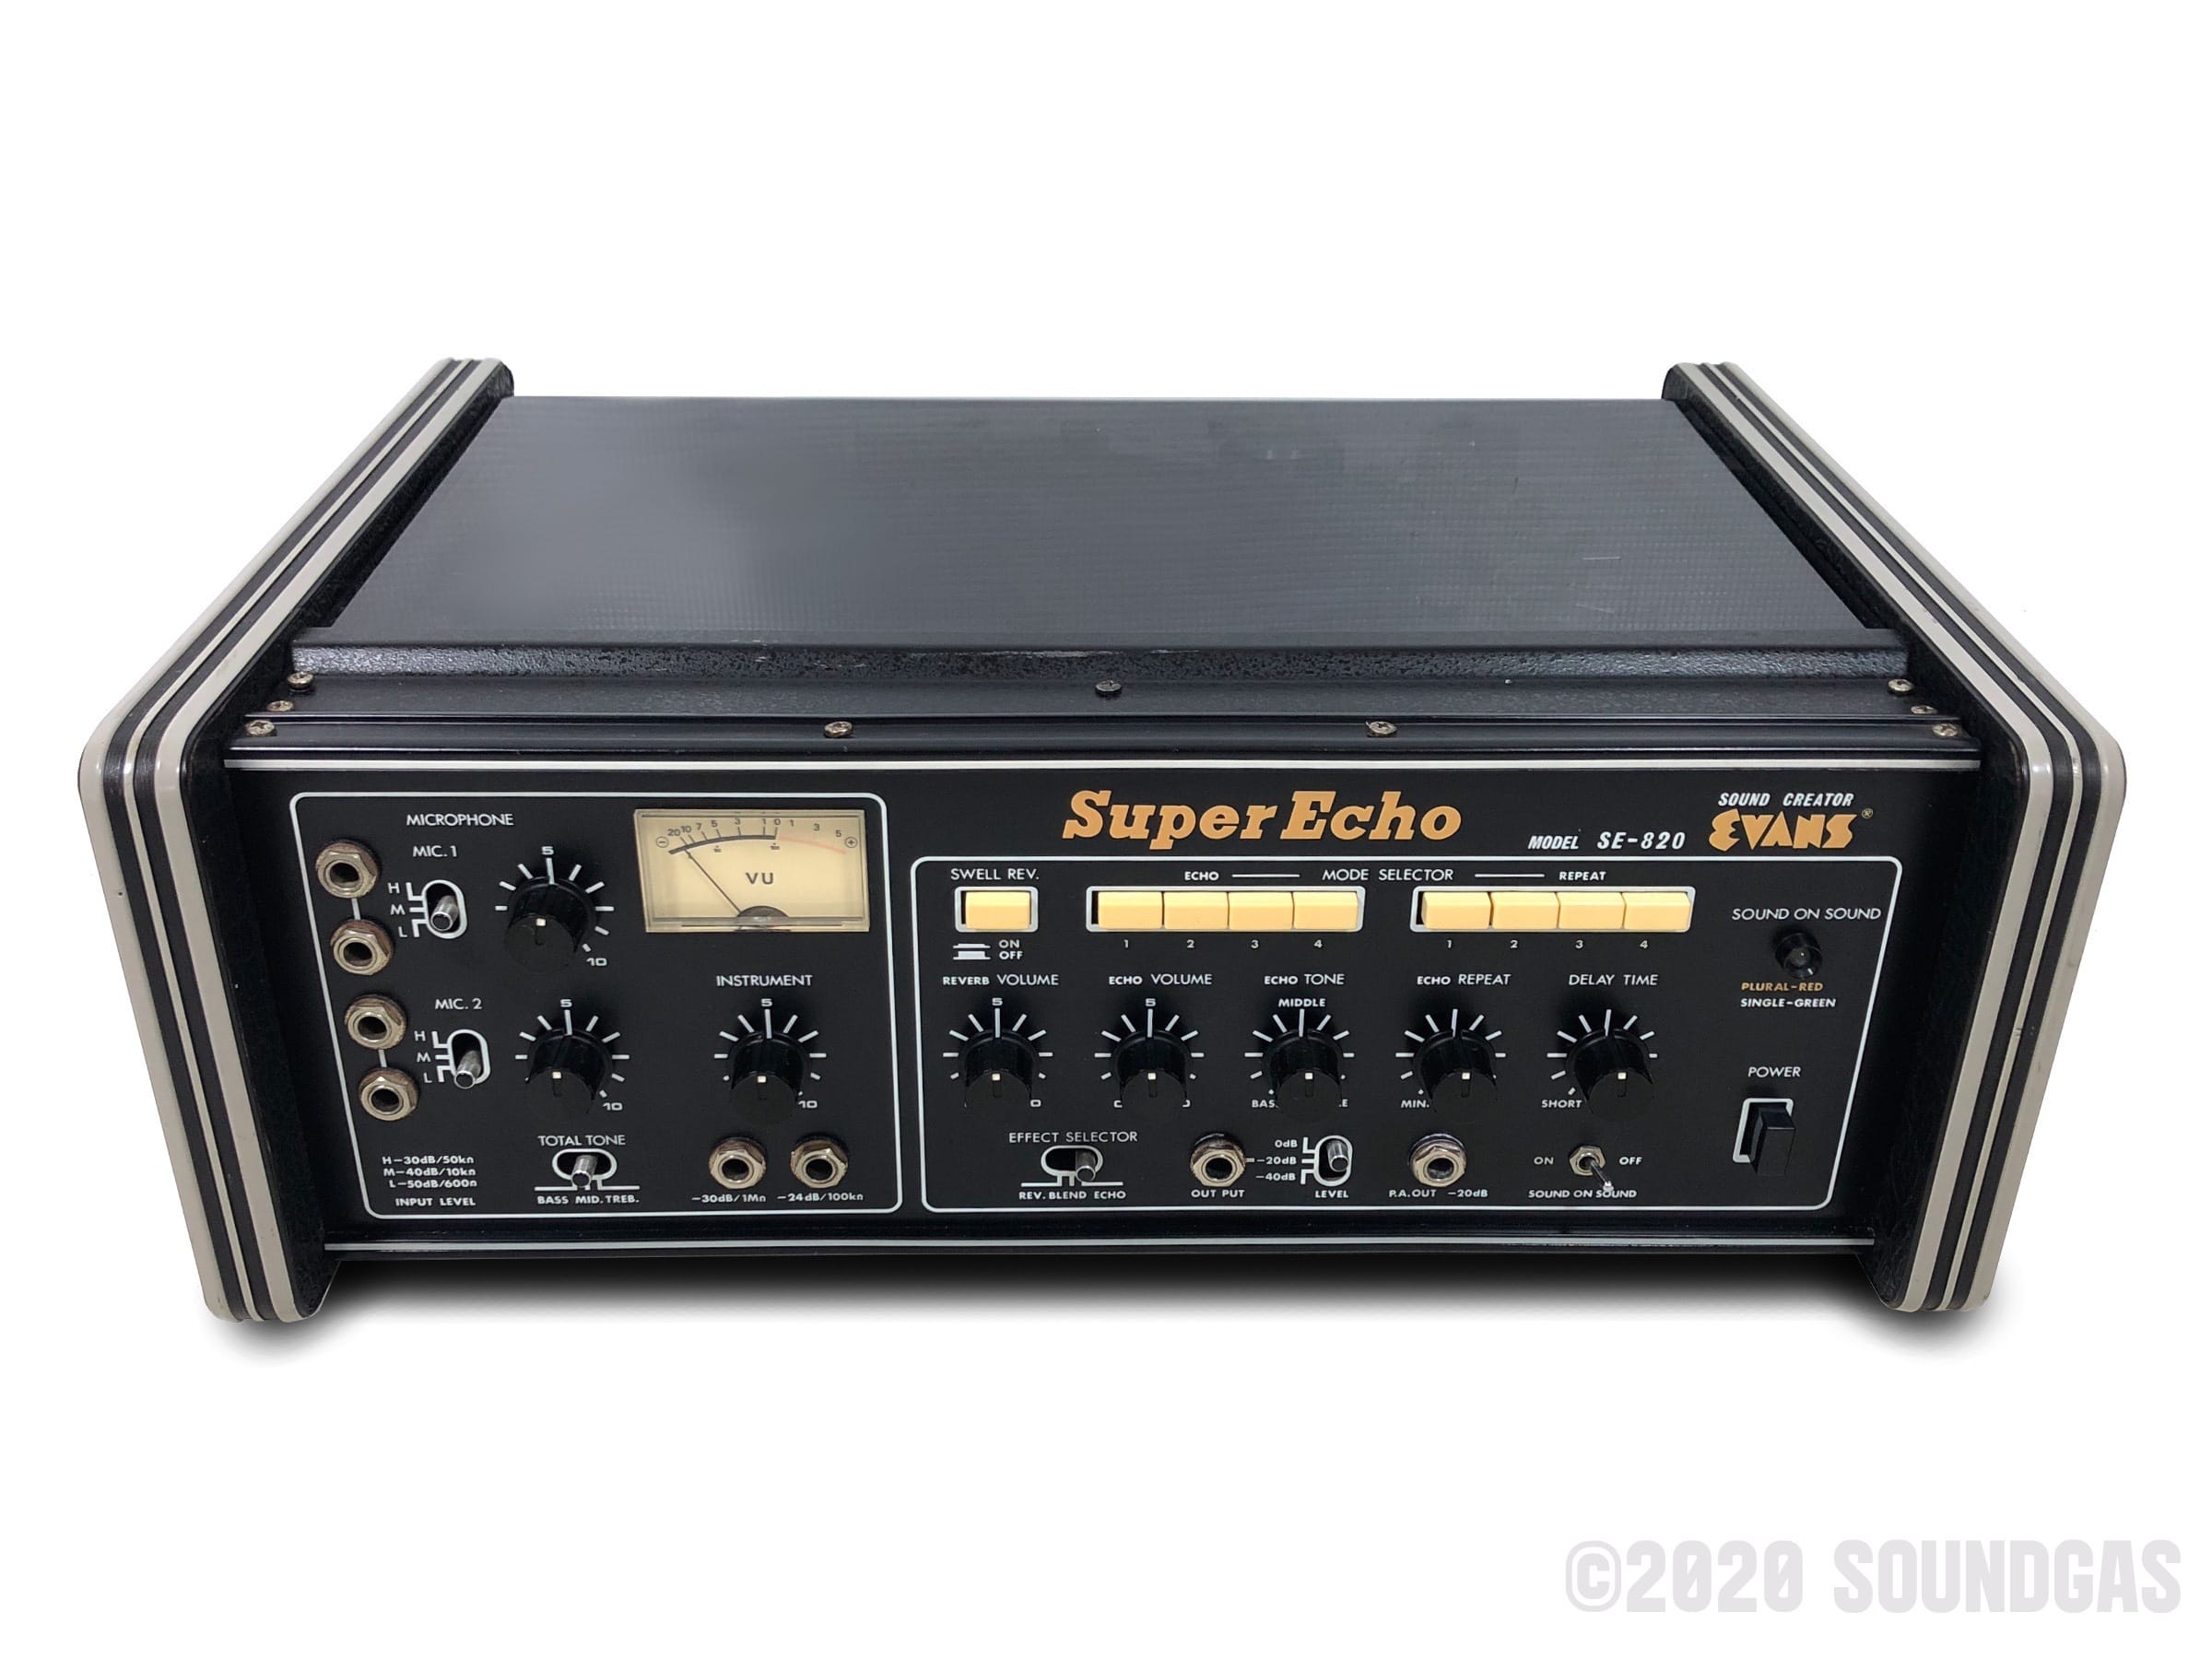 Evans SE-820 Super Echo